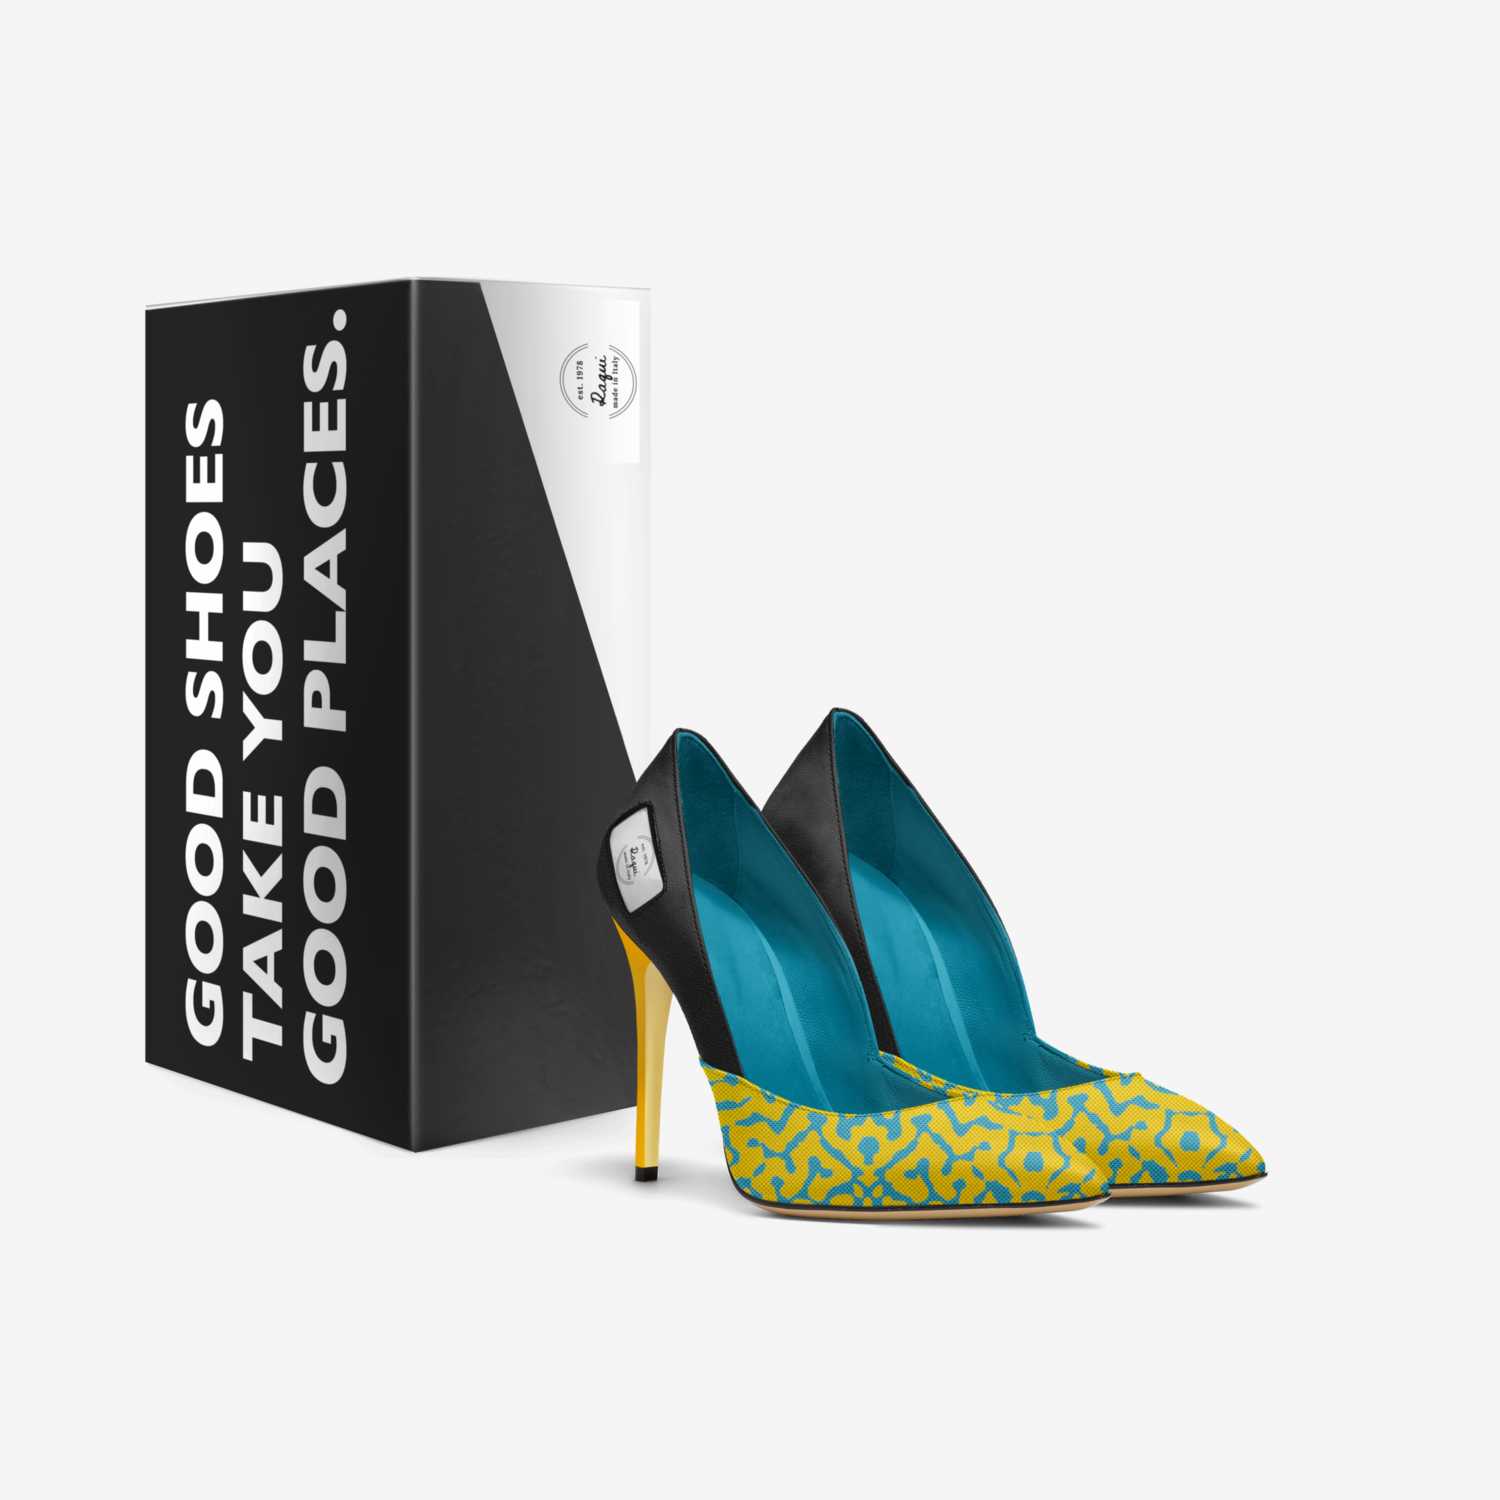 Raqui custom made in Italy shoes by Raquel Diallo | Box view